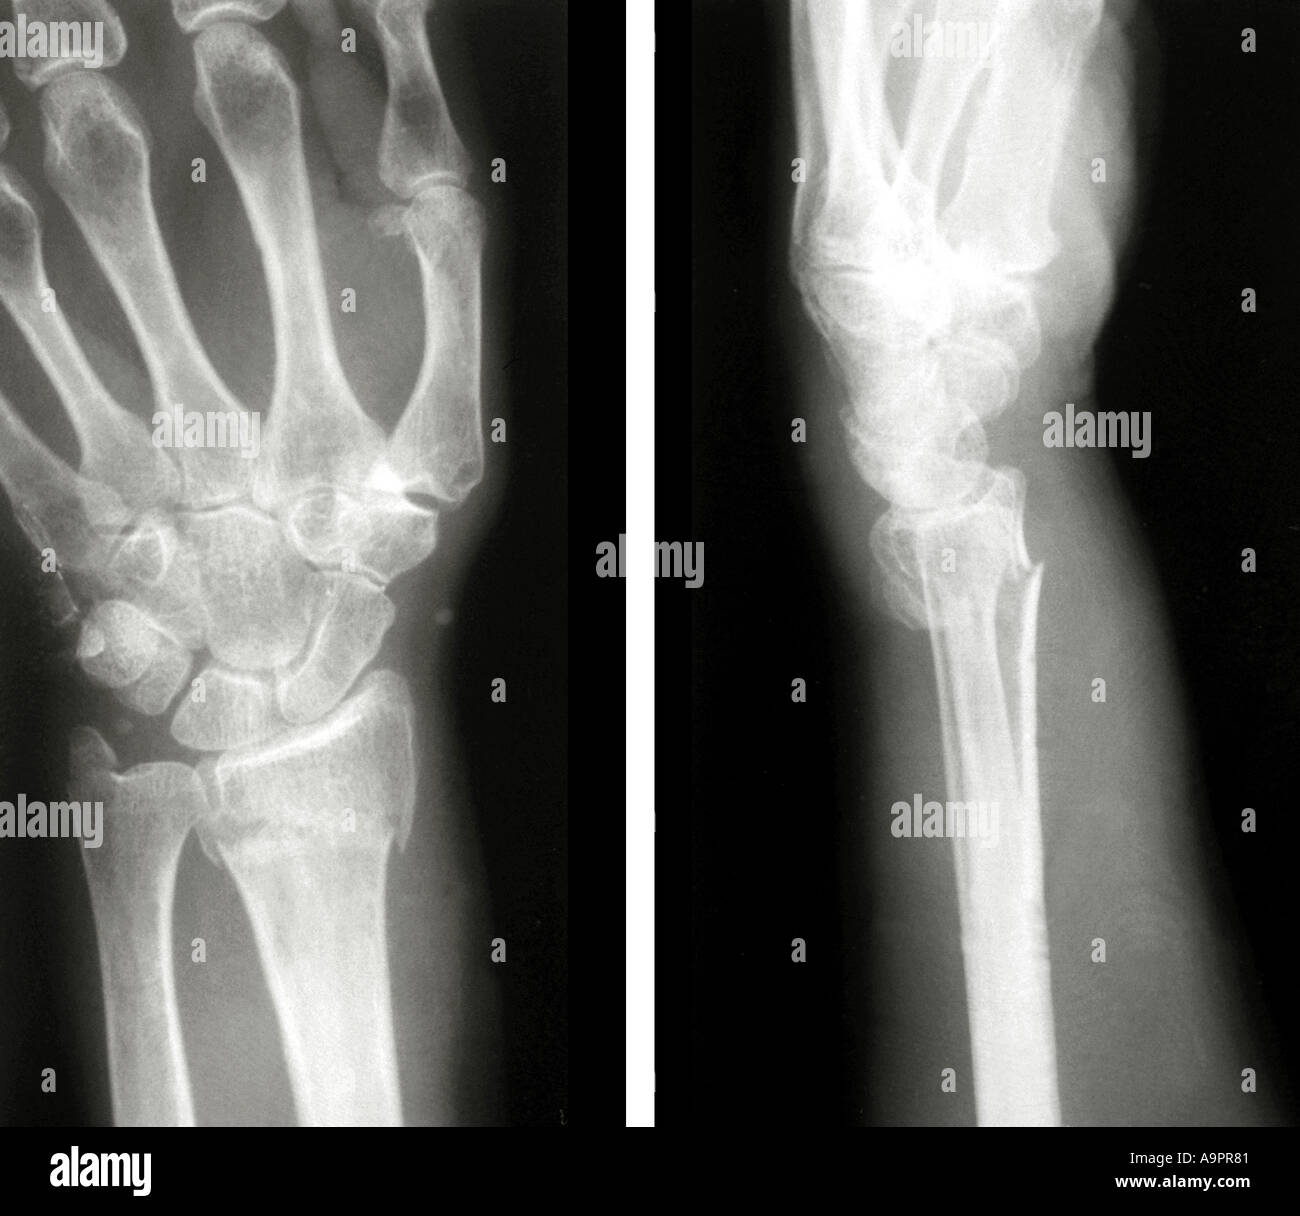 X ray frattura di Colles Foto stock - Alamy